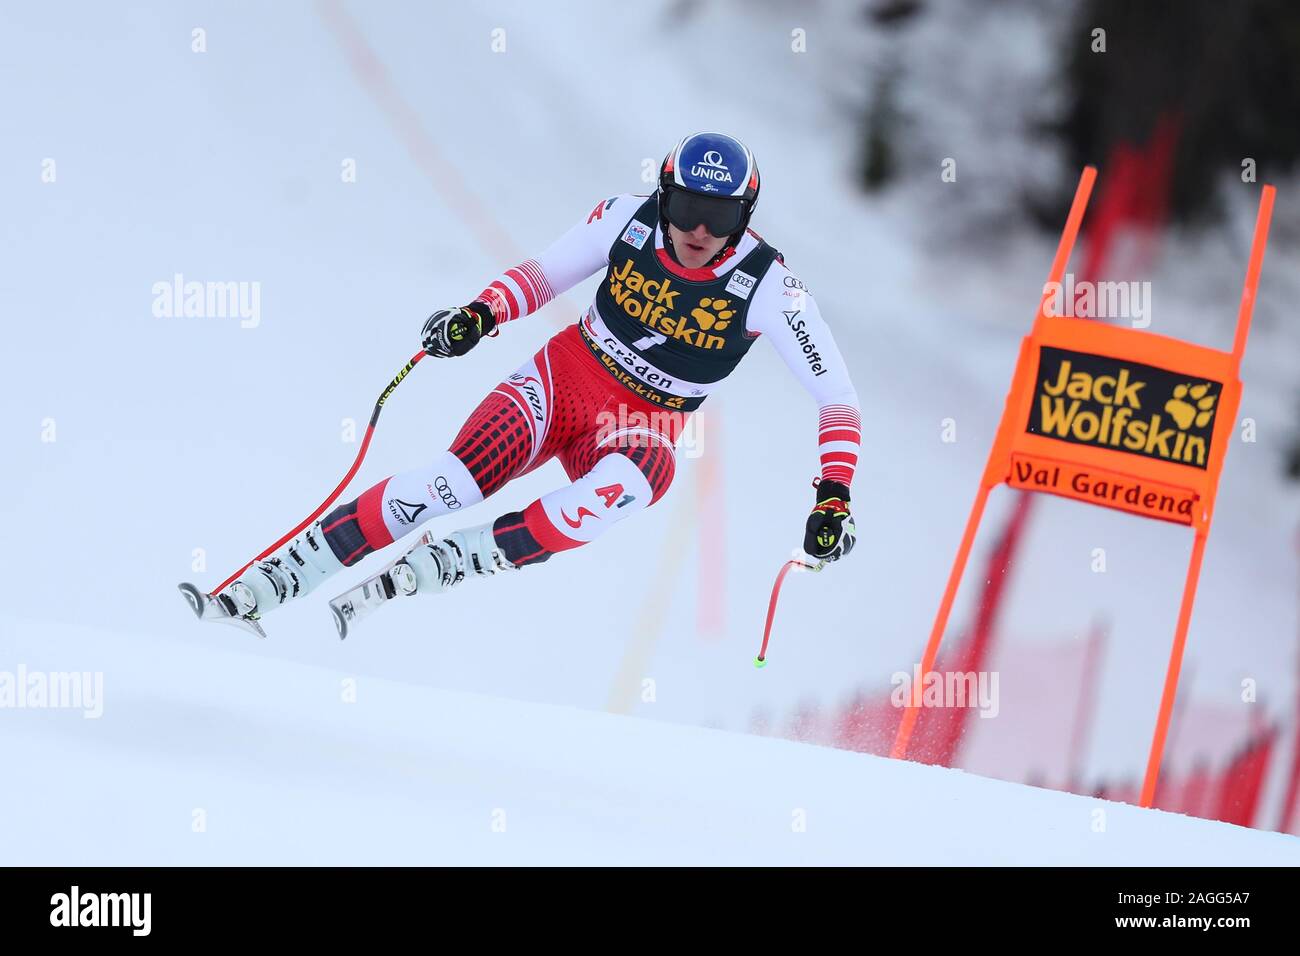 Matthias Mayer of Austria during the Audi FIS Alpine Ski World Cup Downhill training on December 19 2019 in Val Gardena, Italy. Stock Photo